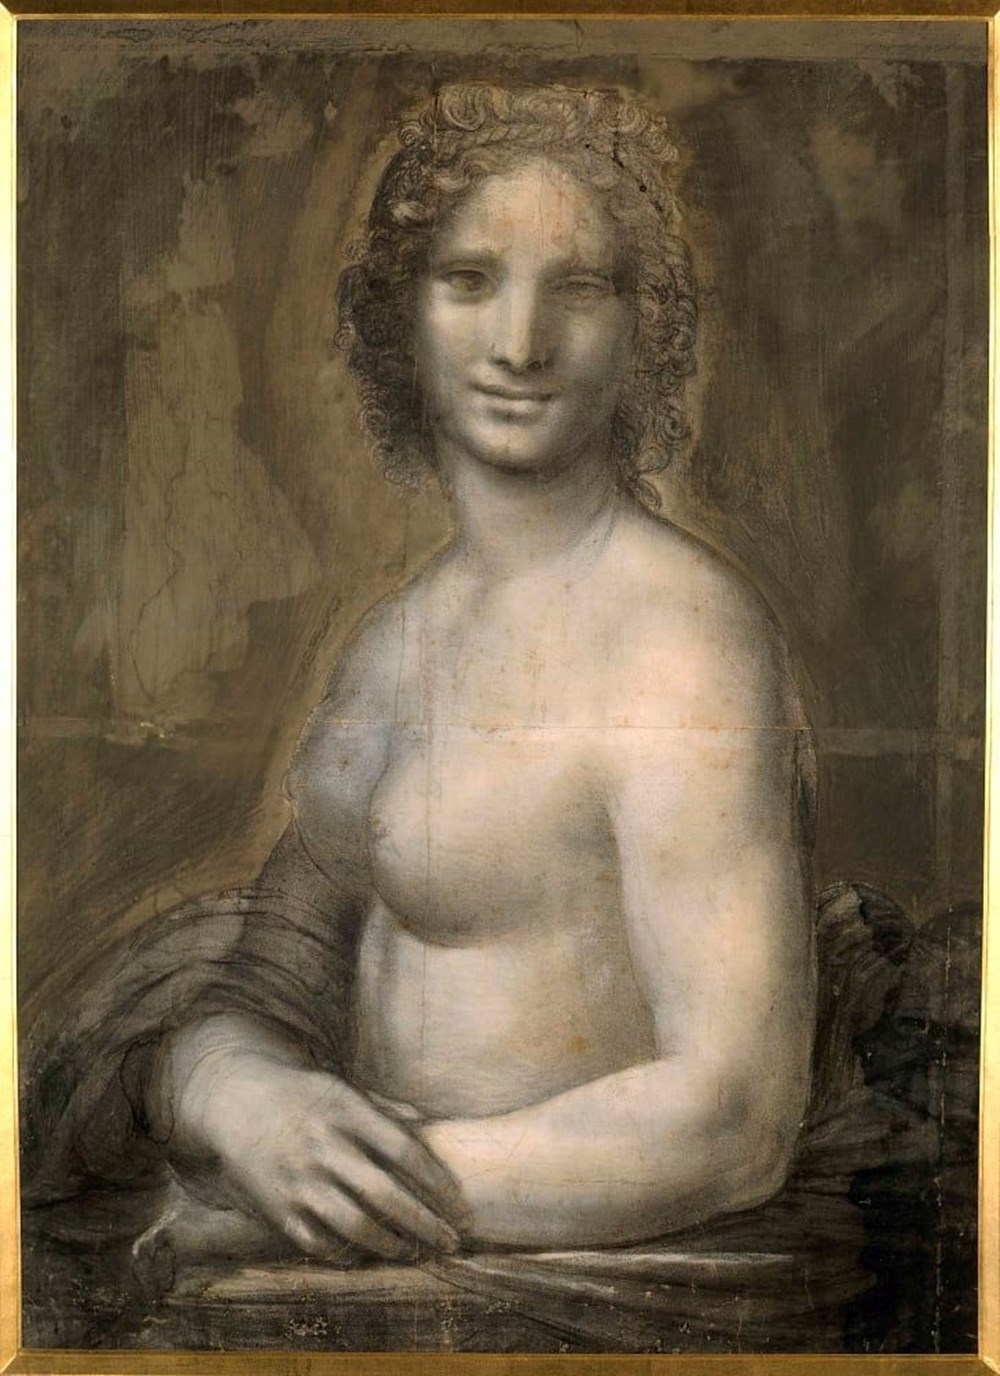 Cerchia di Leonardo da Vinci, Gioconda nuda (1514-1516 circa; carboncino e biacca su carta, 724 x 540 mm; Chantilly, Musée Condé)